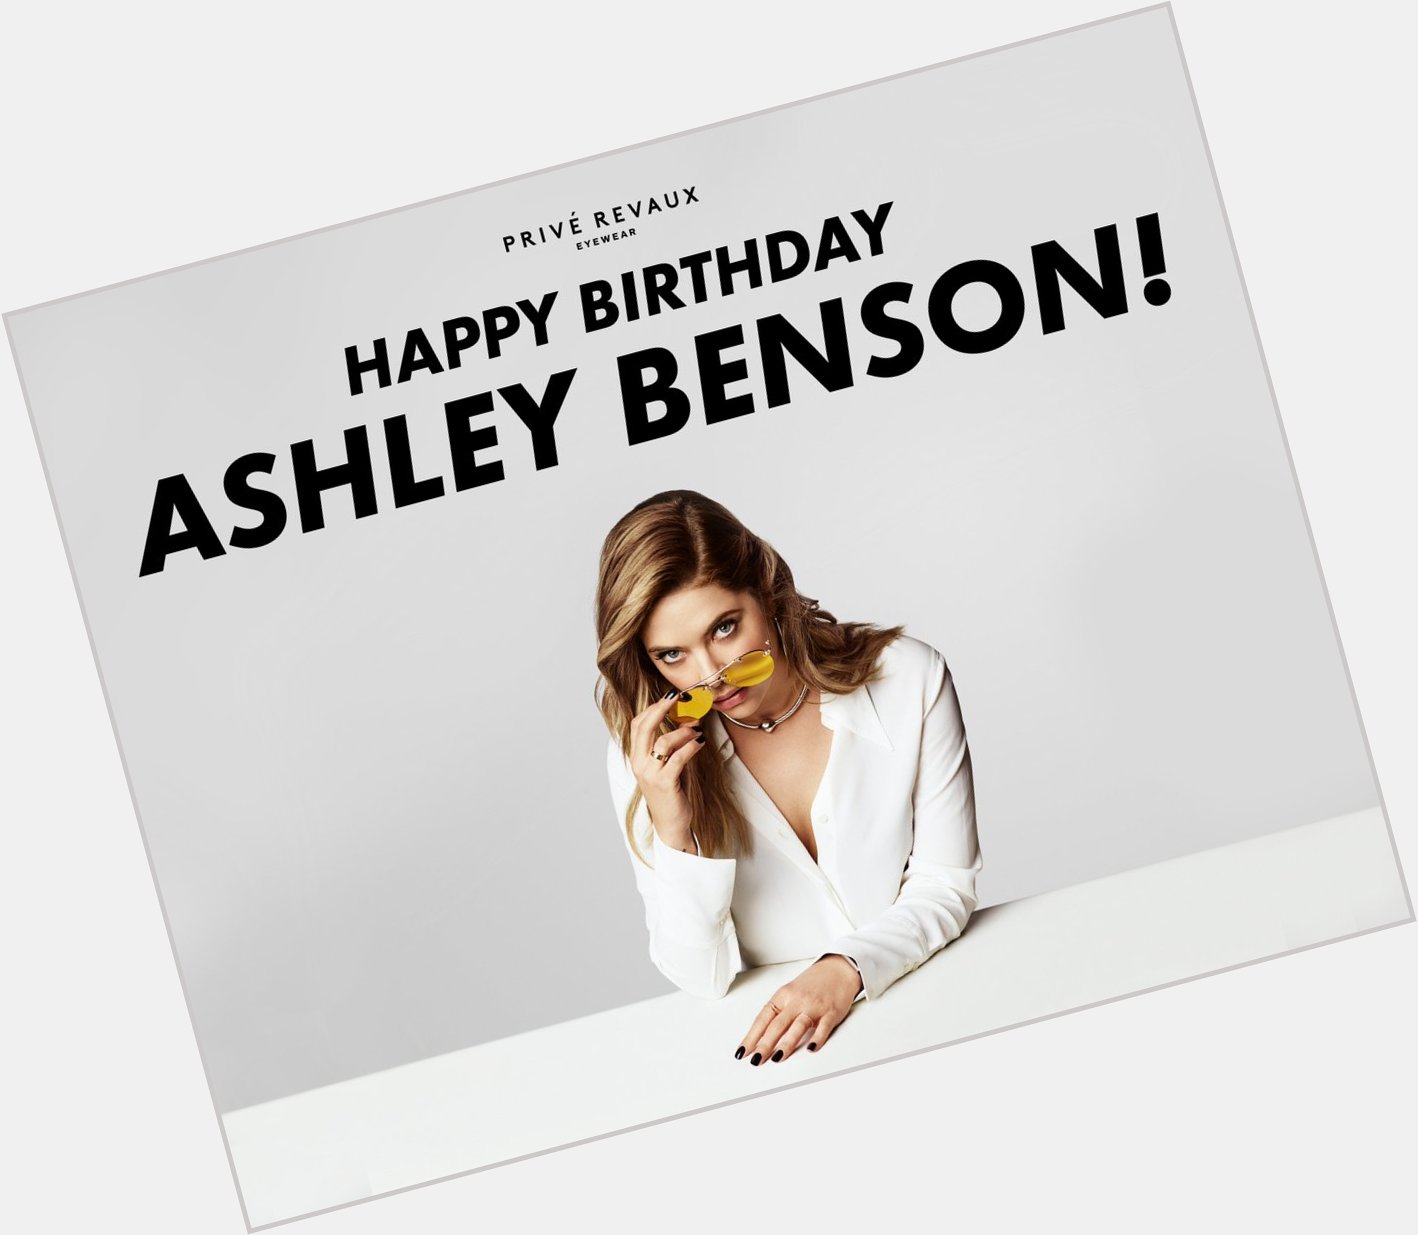 Happy birthday to our Privé Revaux partner, Ashley Benson! 